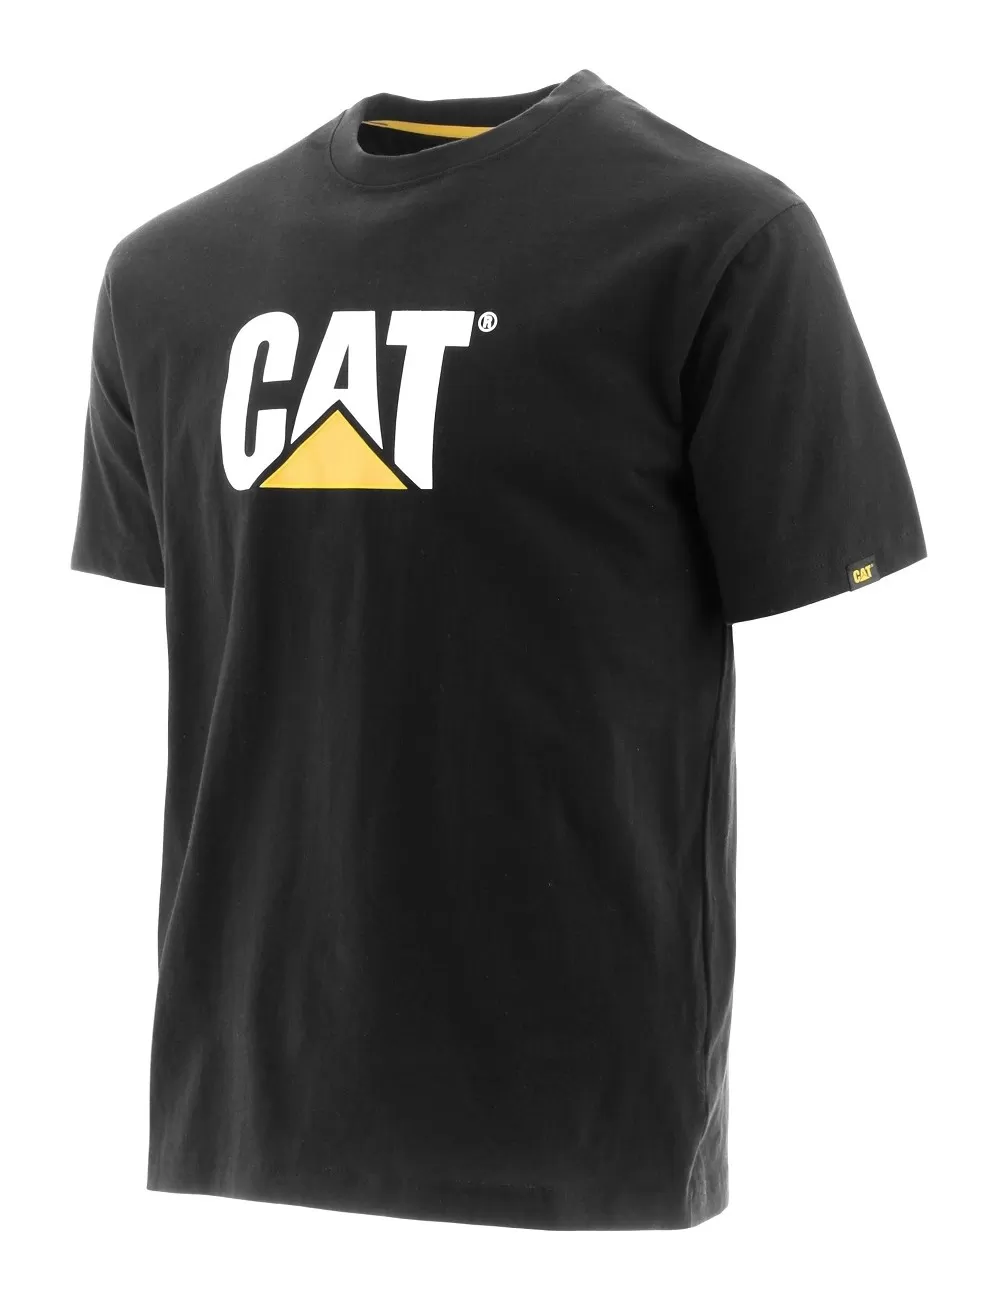 Koszulka robocza CAT Trademark Logo